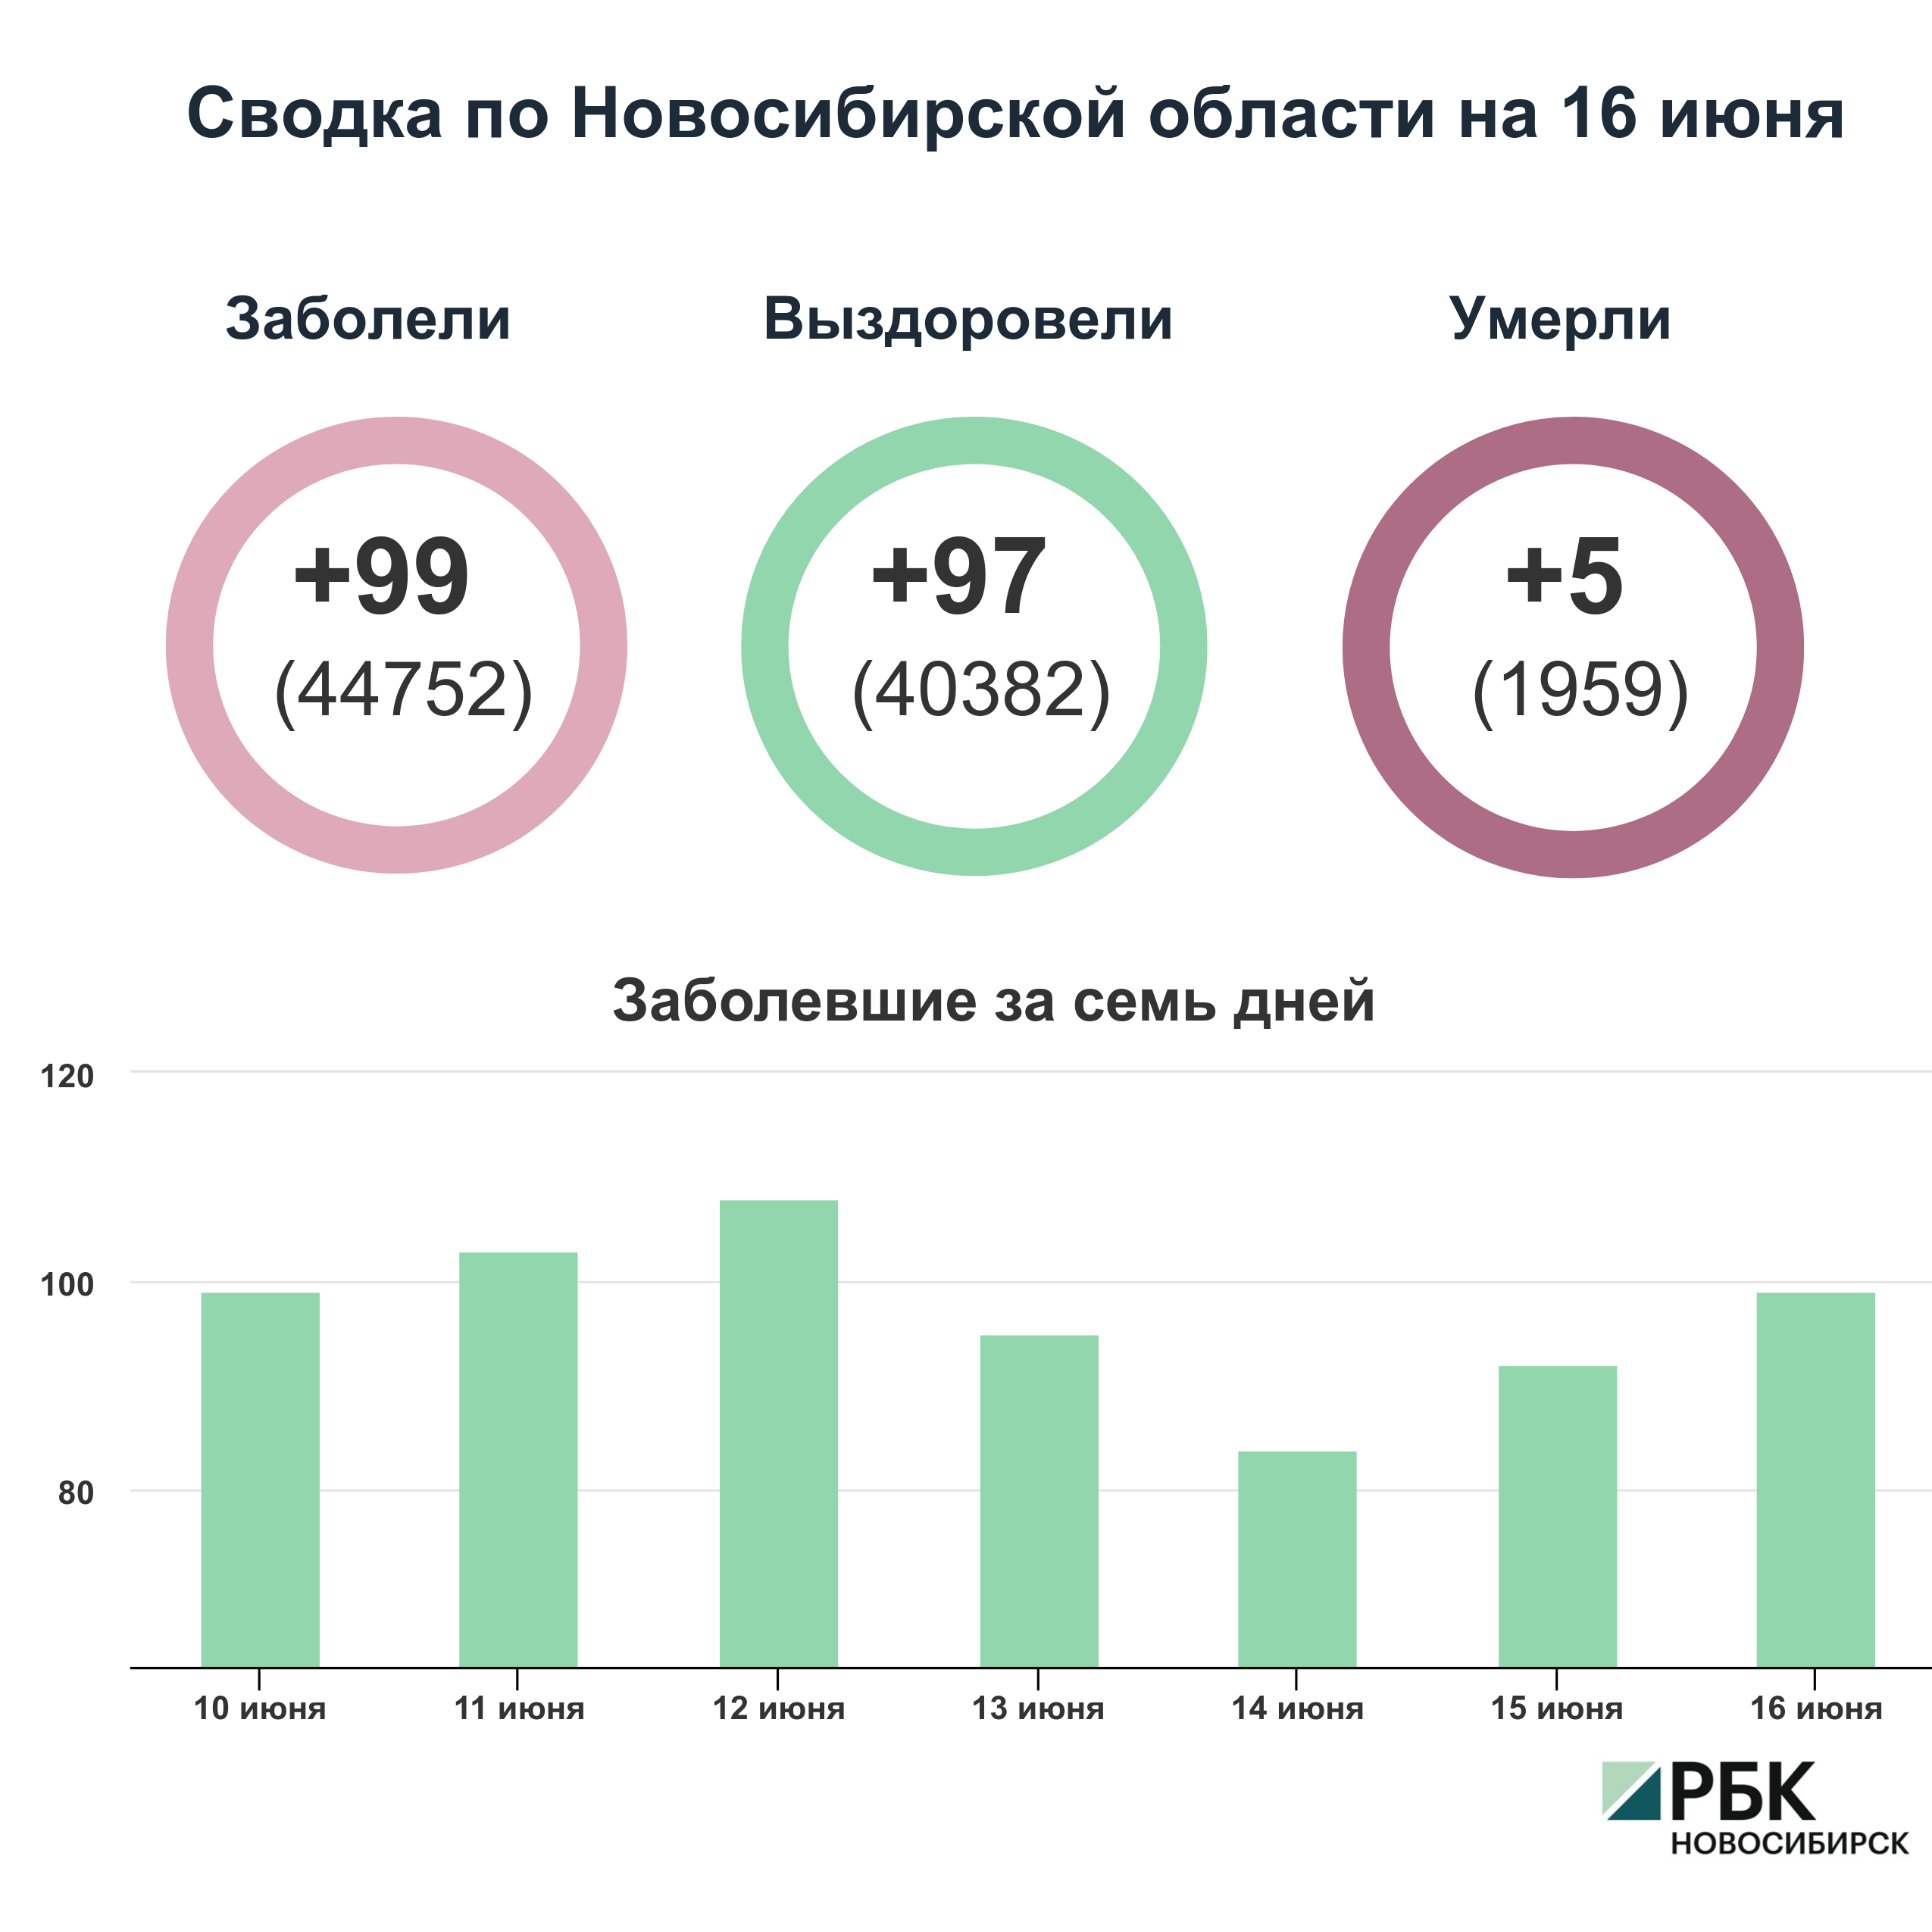 Коронавирус в Новосибирске: сводка на 16 июня